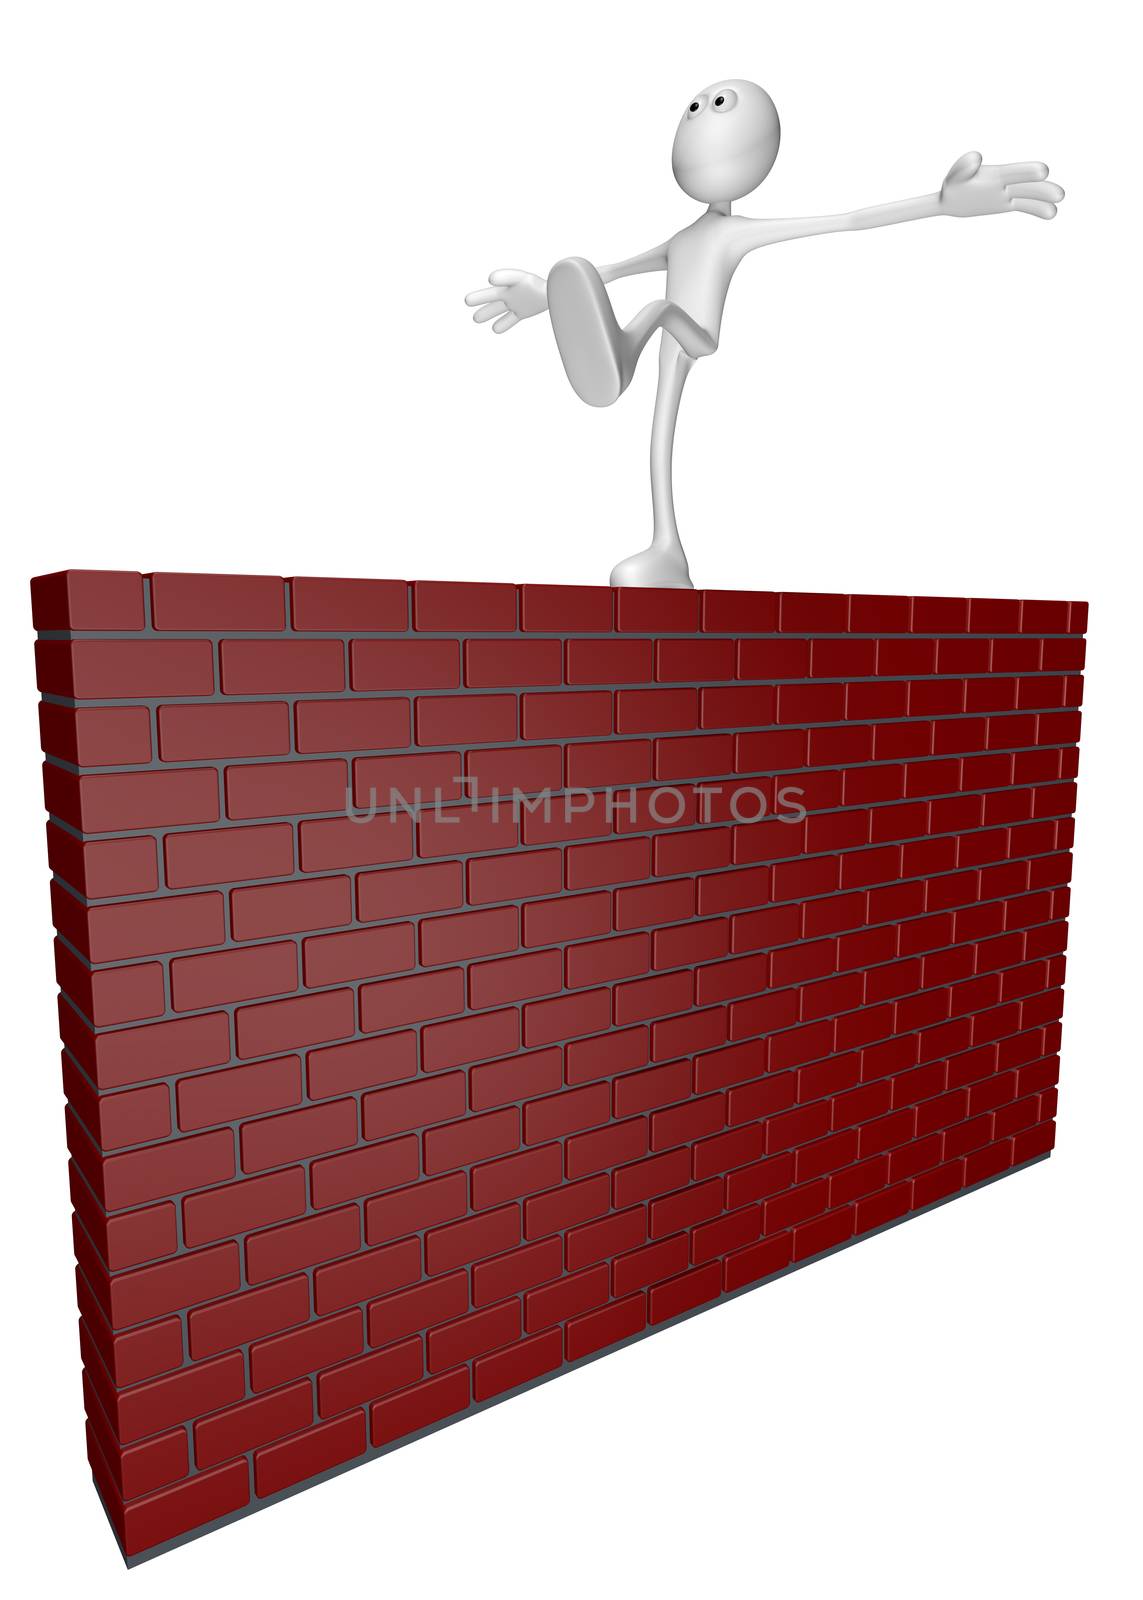 cartoon guy balances on brick wall - 3d illustration